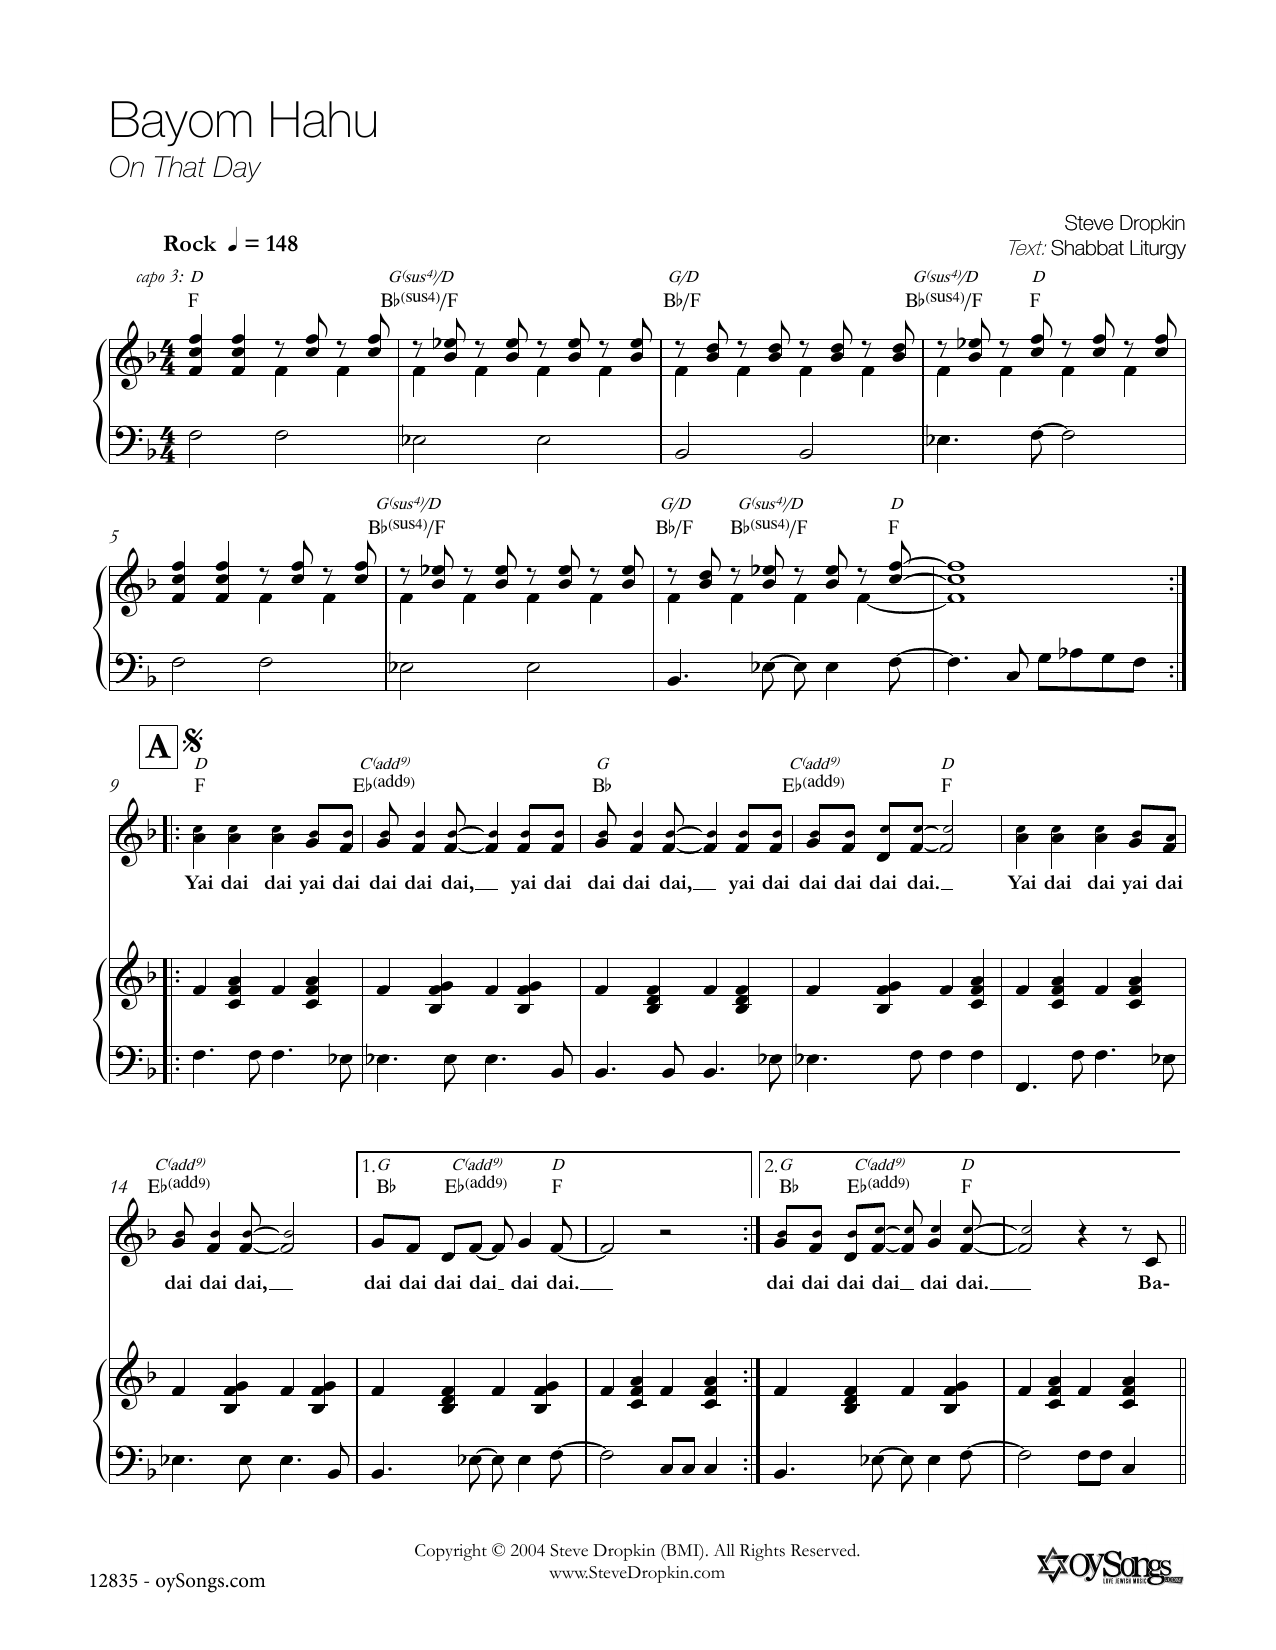 Steve Dropkin Bayom Hahu sheet music notes and chords arranged for Lead Sheet / Fake Book